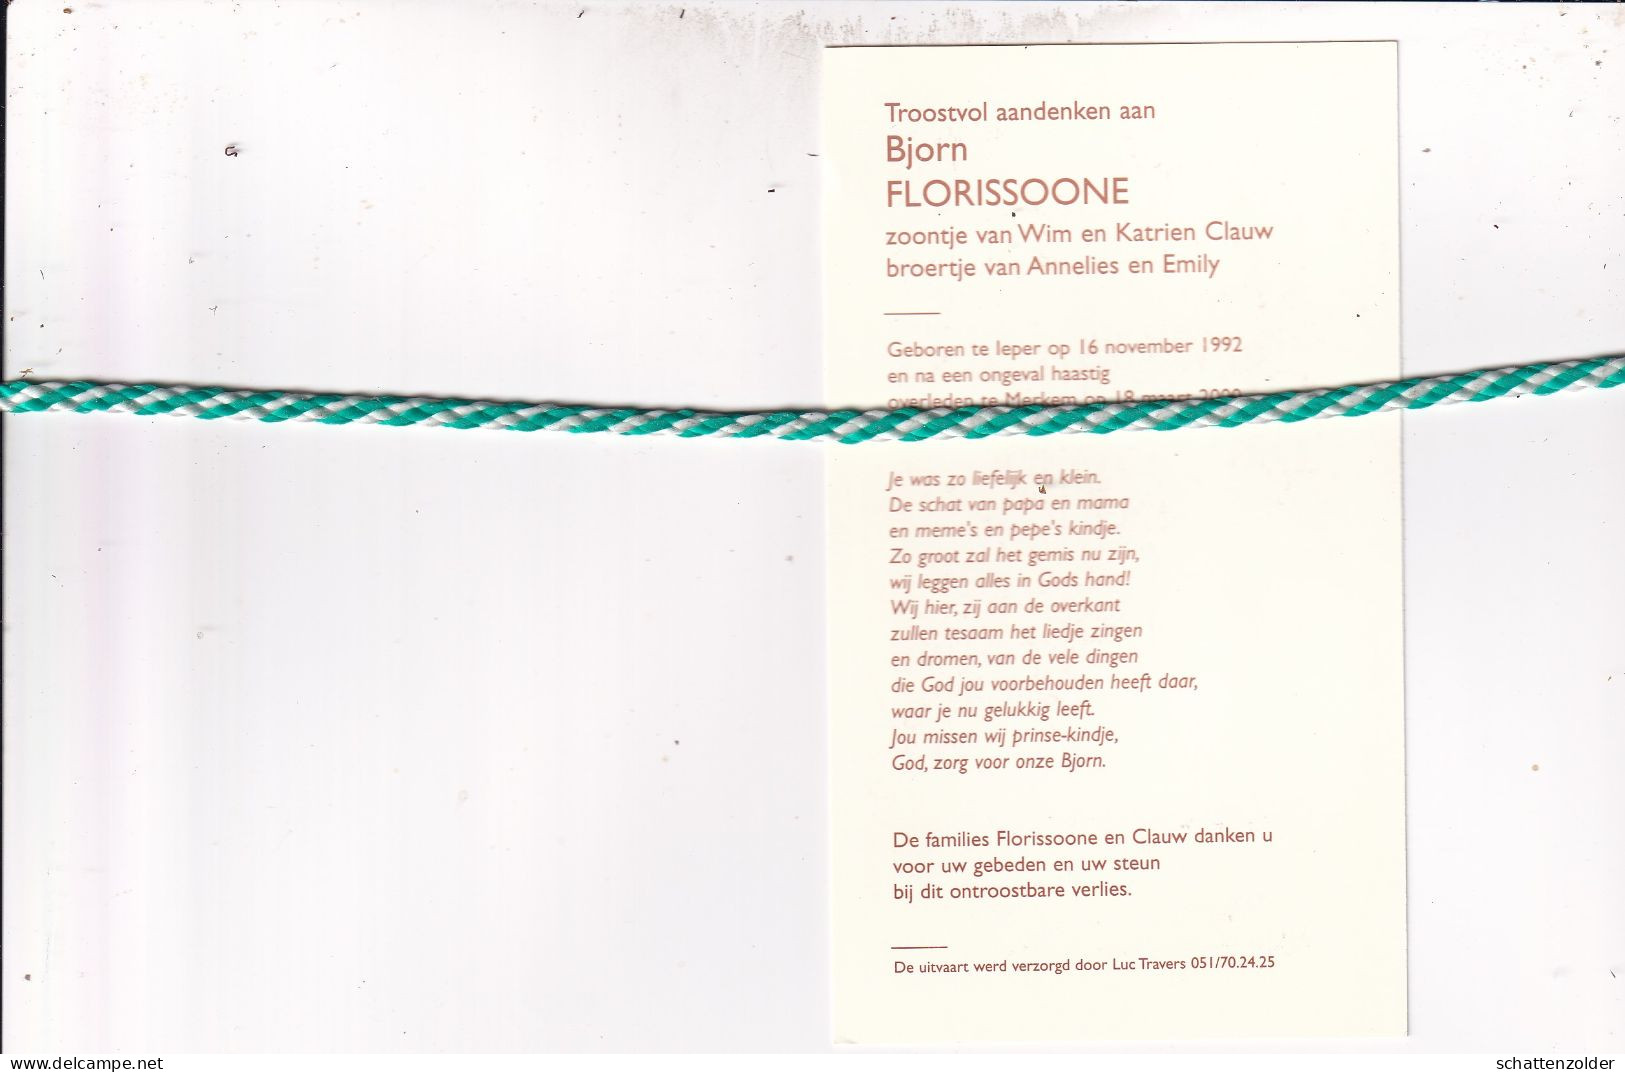 Bjorn Florissoone-Clauw, Ieper 1992, Merkem 2000. Foto - Obituary Notices